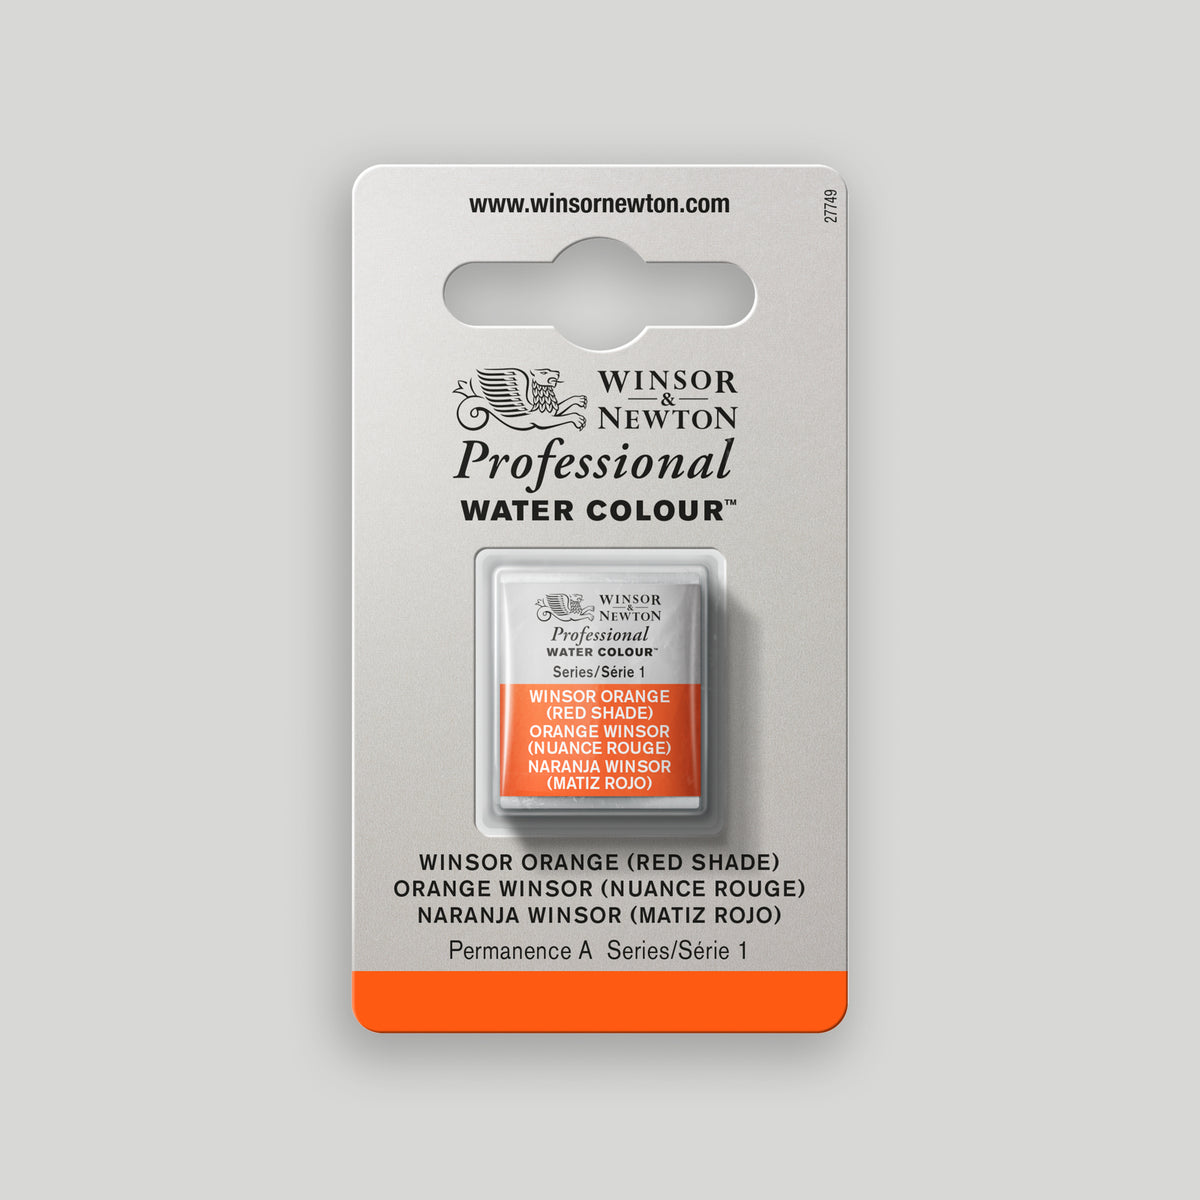 Winsor & Newton Professional Water Colour half pan Winsor Orange (Red shade) 1